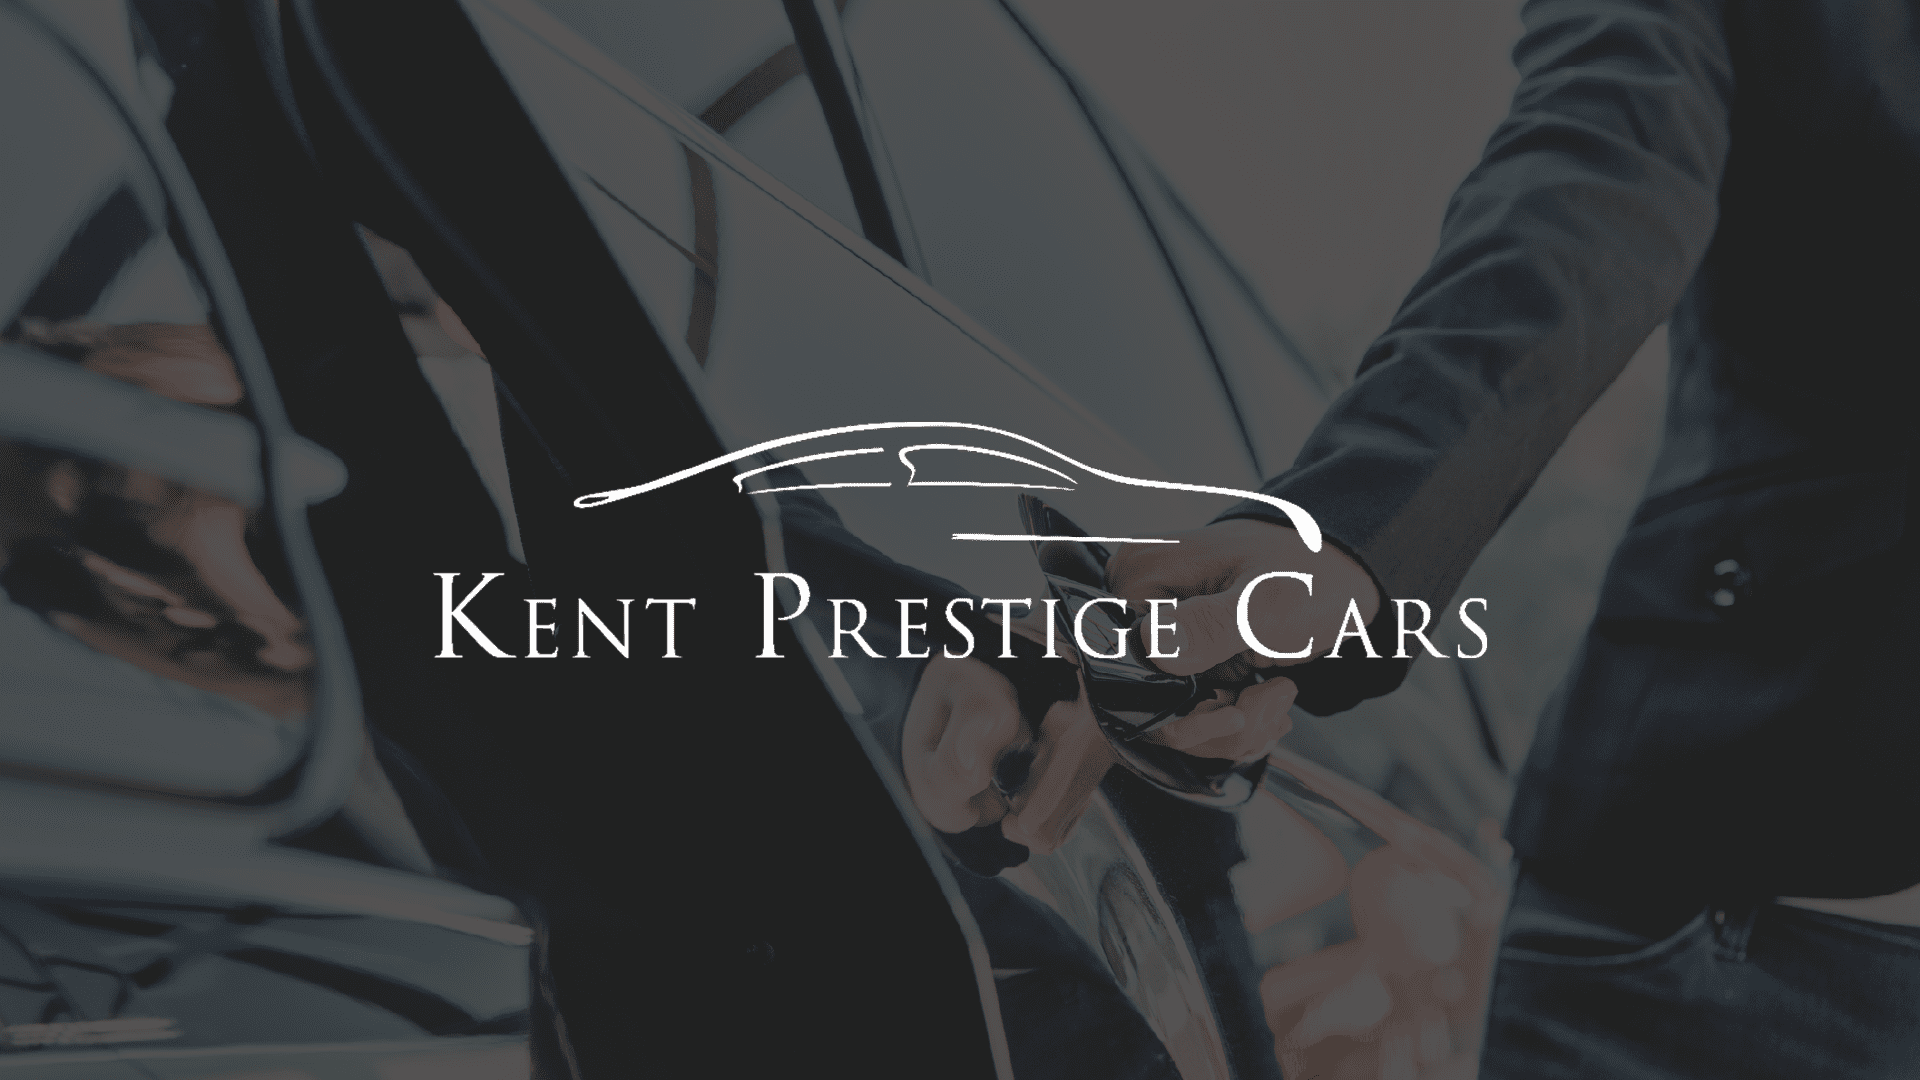 Kent Prestige Cars Featured Image